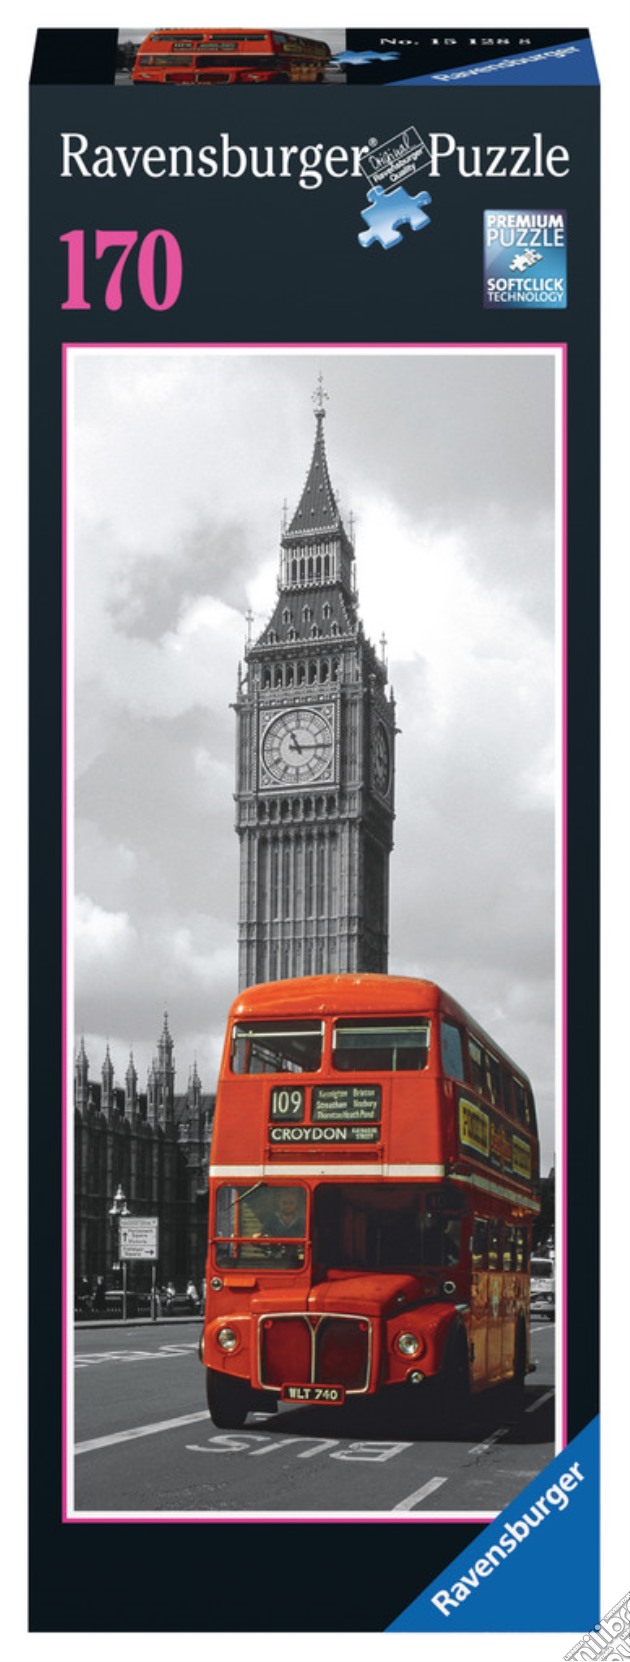 Puzzle Panorama Verticale - London Bus puzzle di RAVENSBURGER